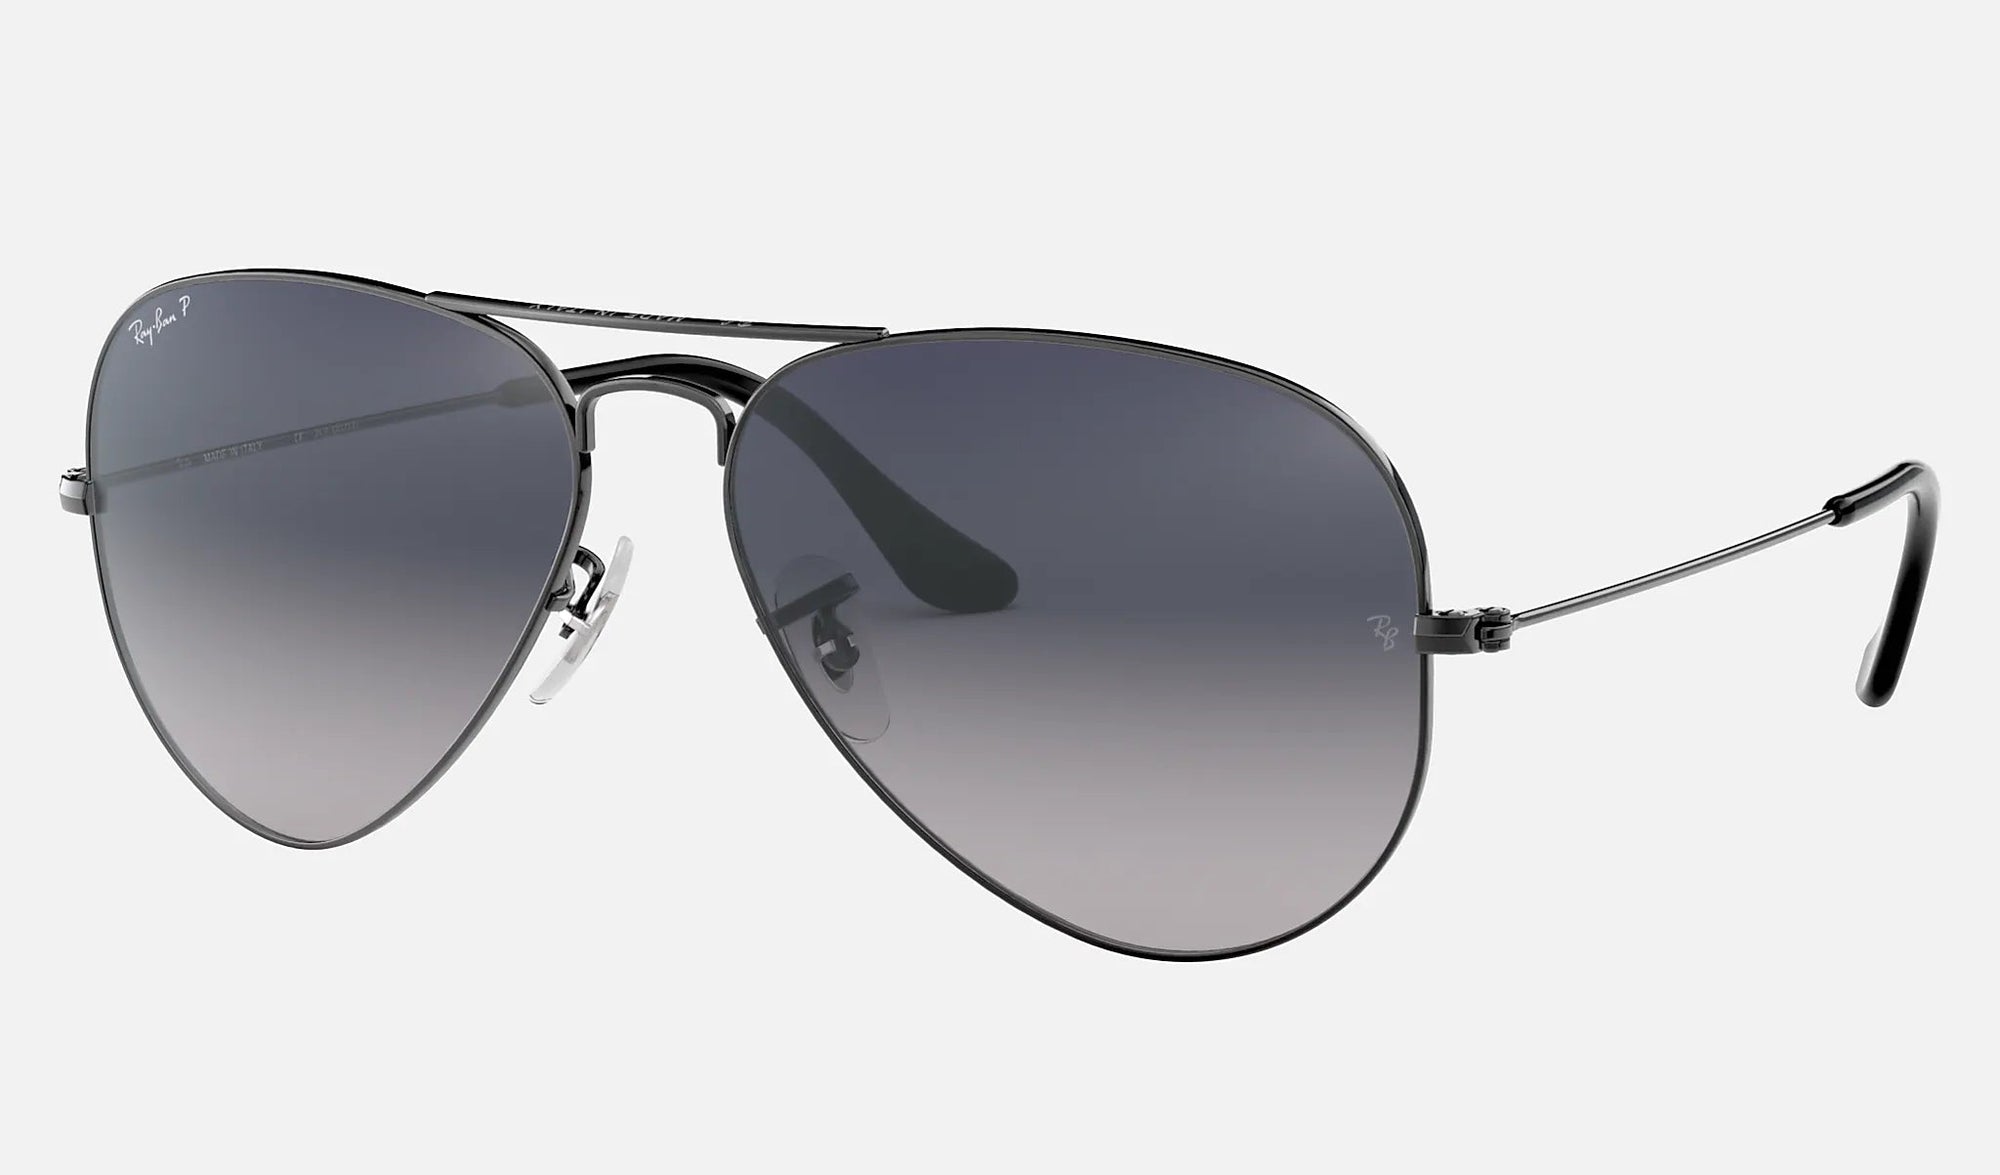 RAY-BAN Aviator Gradient Gunmetal - Blue/Grey Gradient Polarized Sunglasses Sunglasses Ray-Ban 